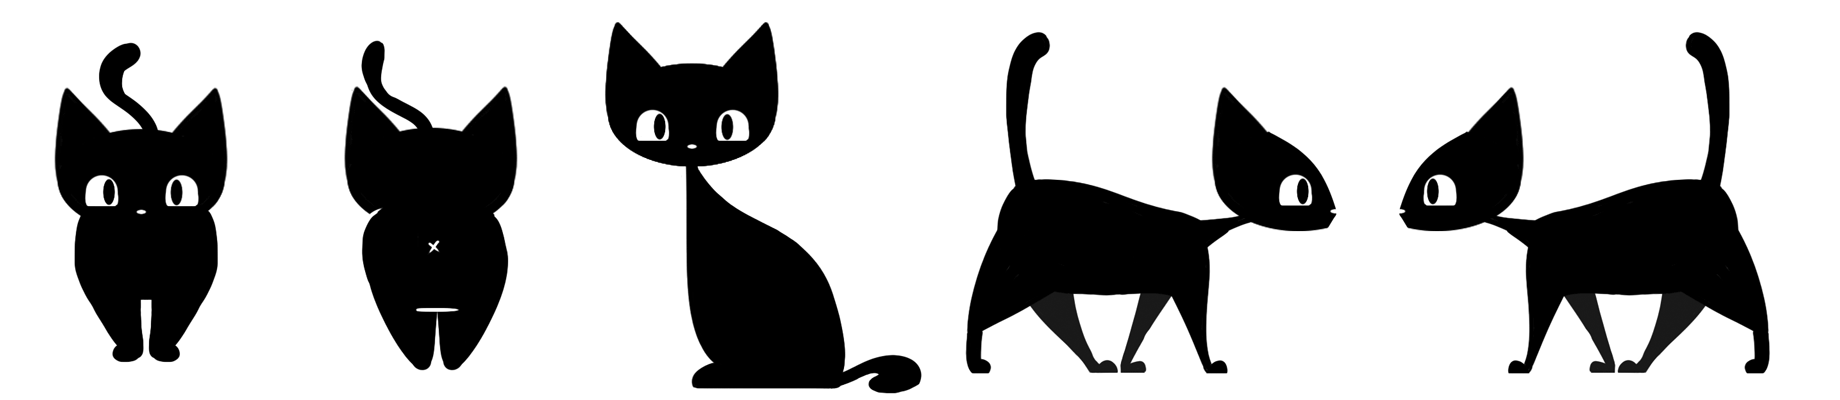 Animation sprites for gutter cat